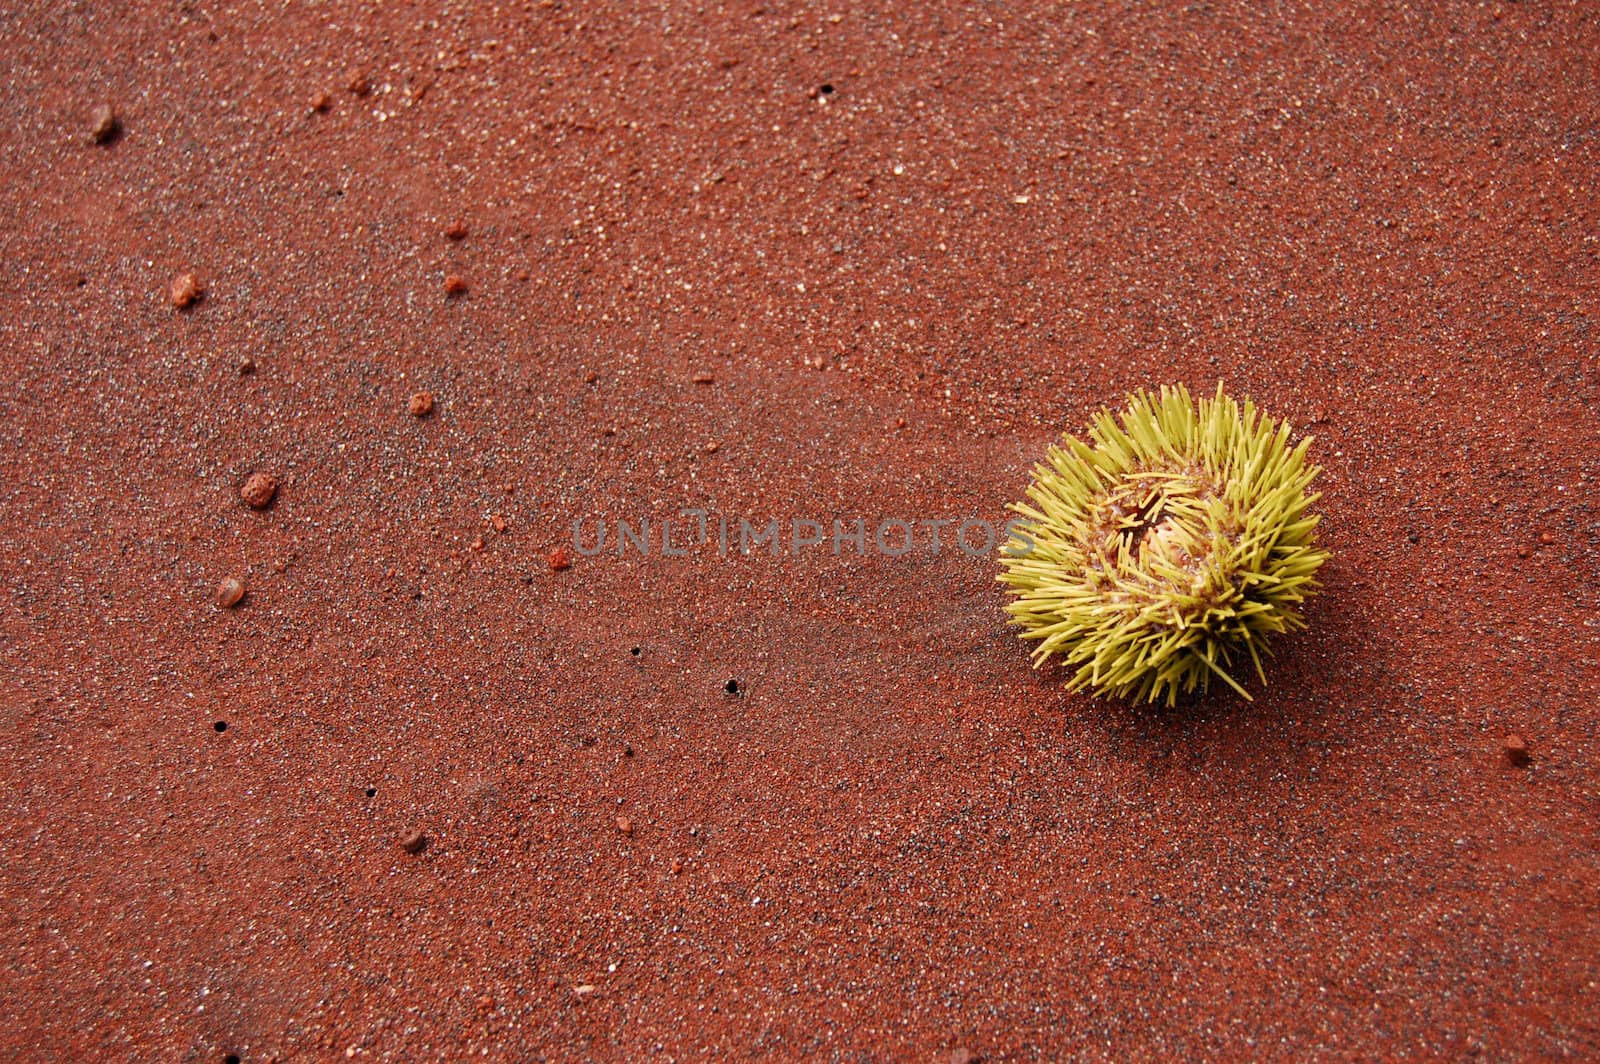 Sea urchin by sarahdoow